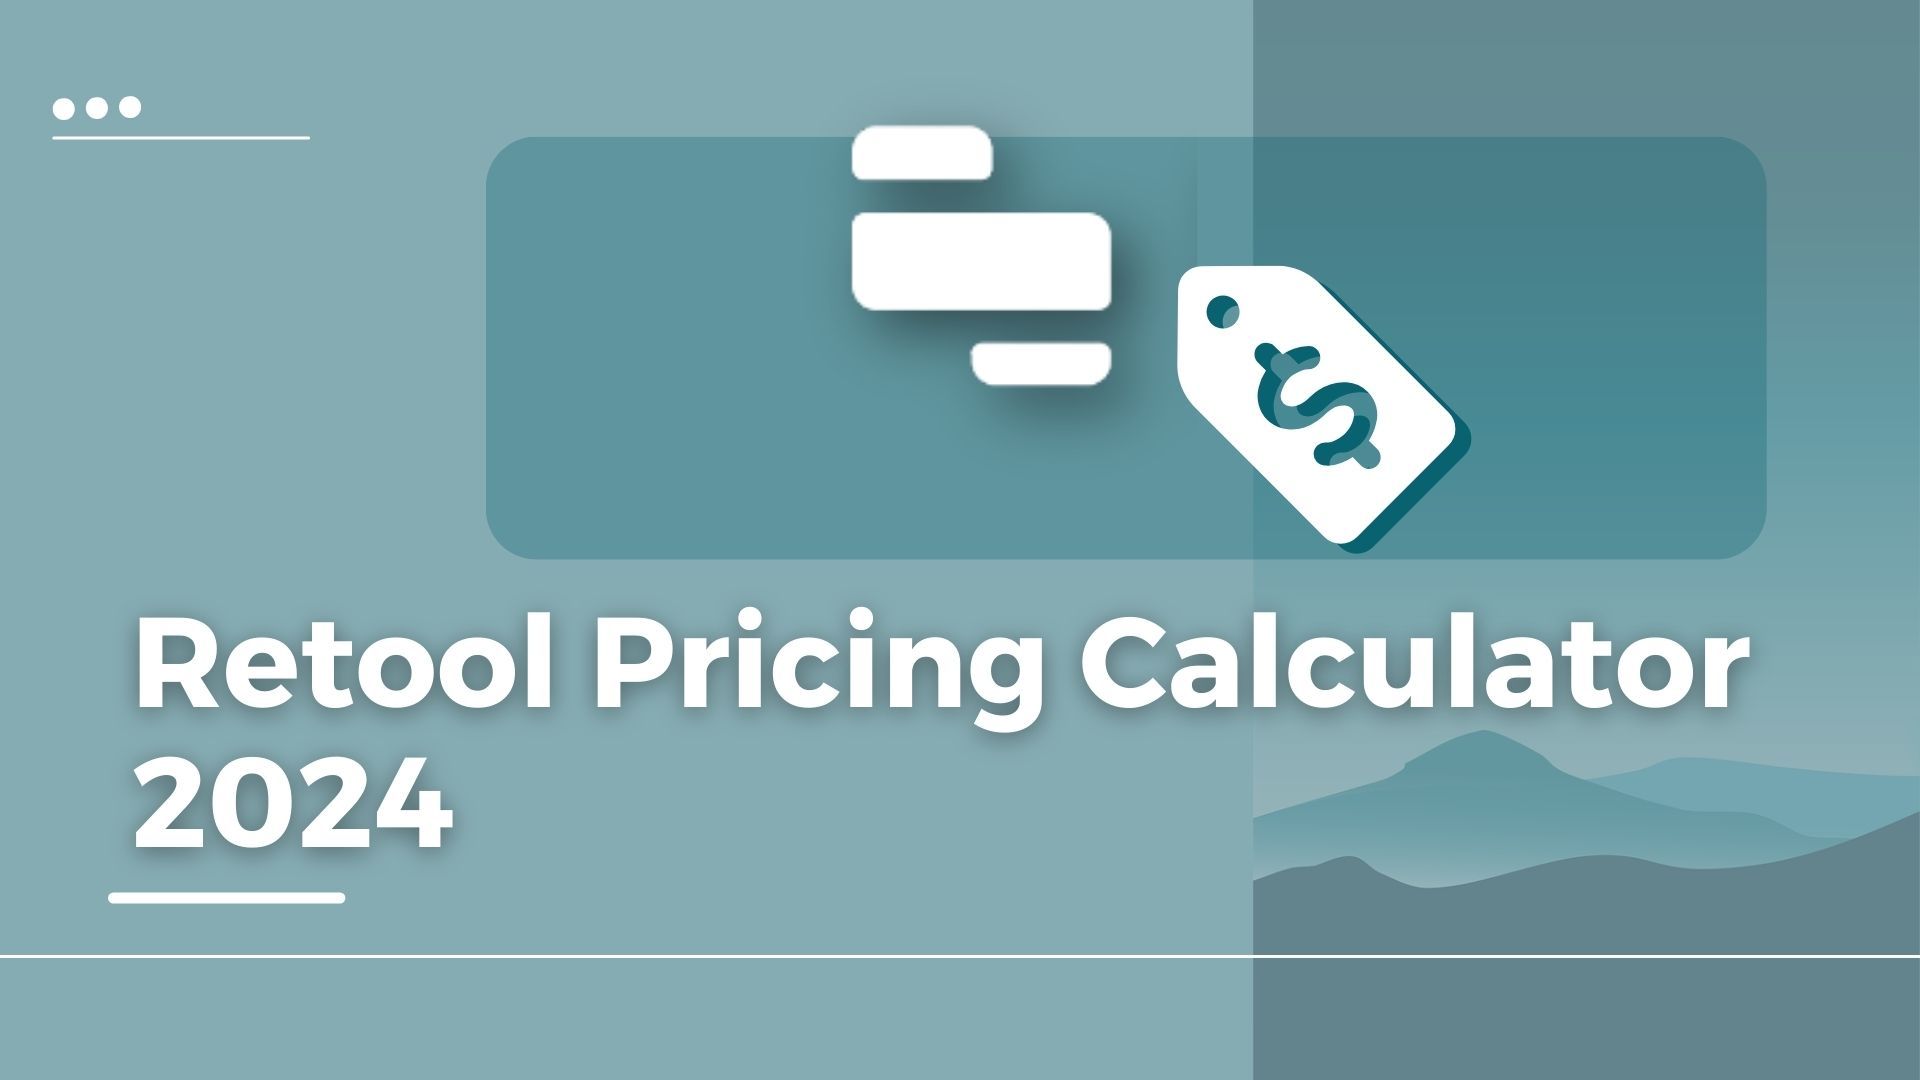 Retool pricing calculator: understand your Retool costs